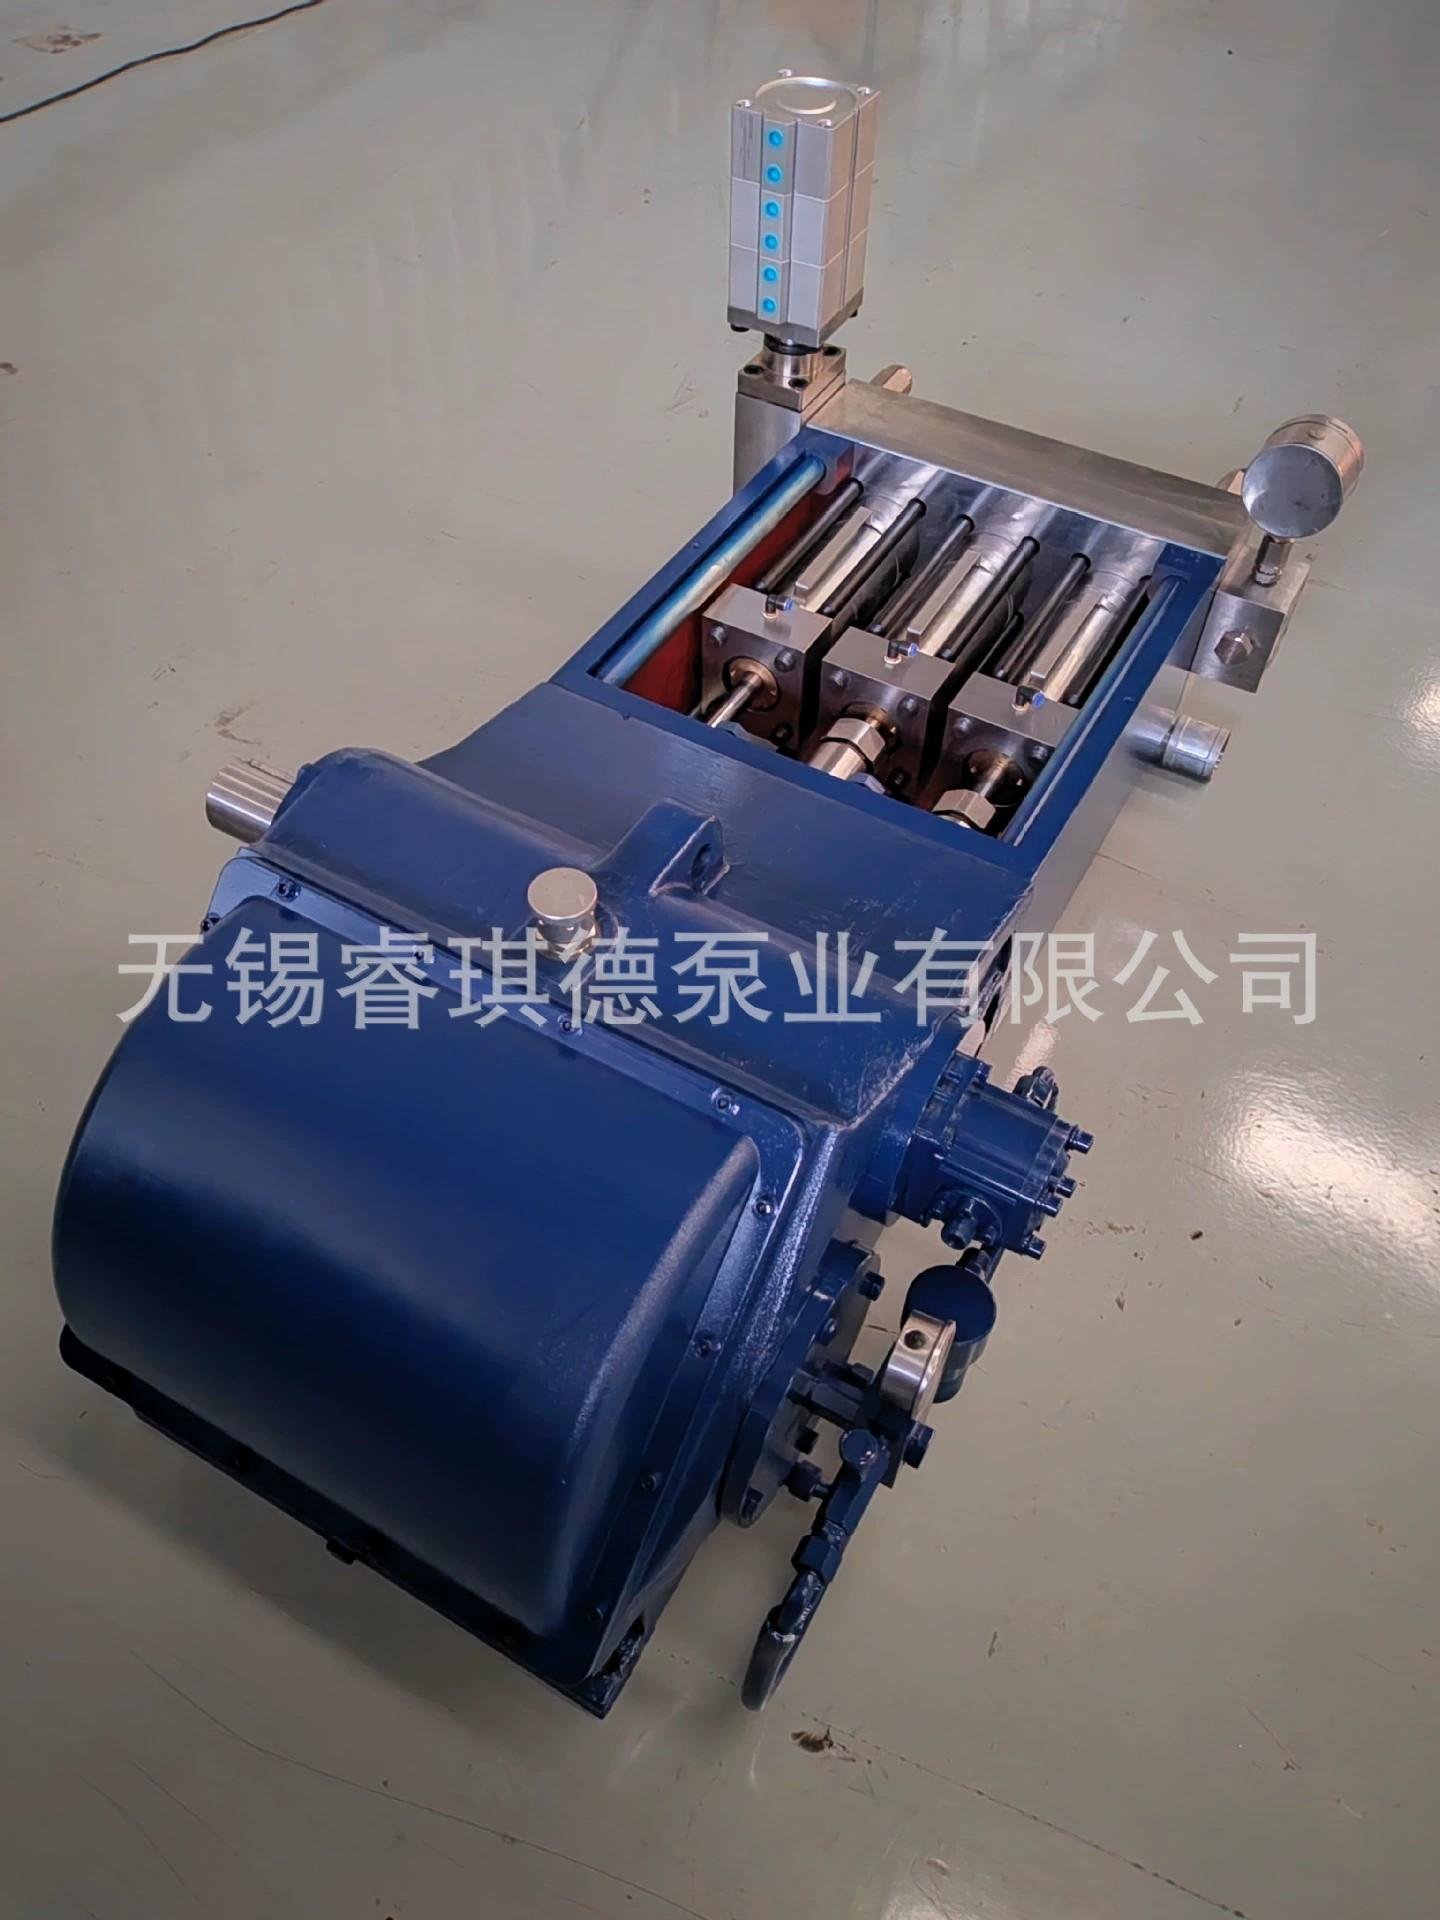 heat exchanger cleaning high pressure pump,high pressure water pump(WP3Q-S)